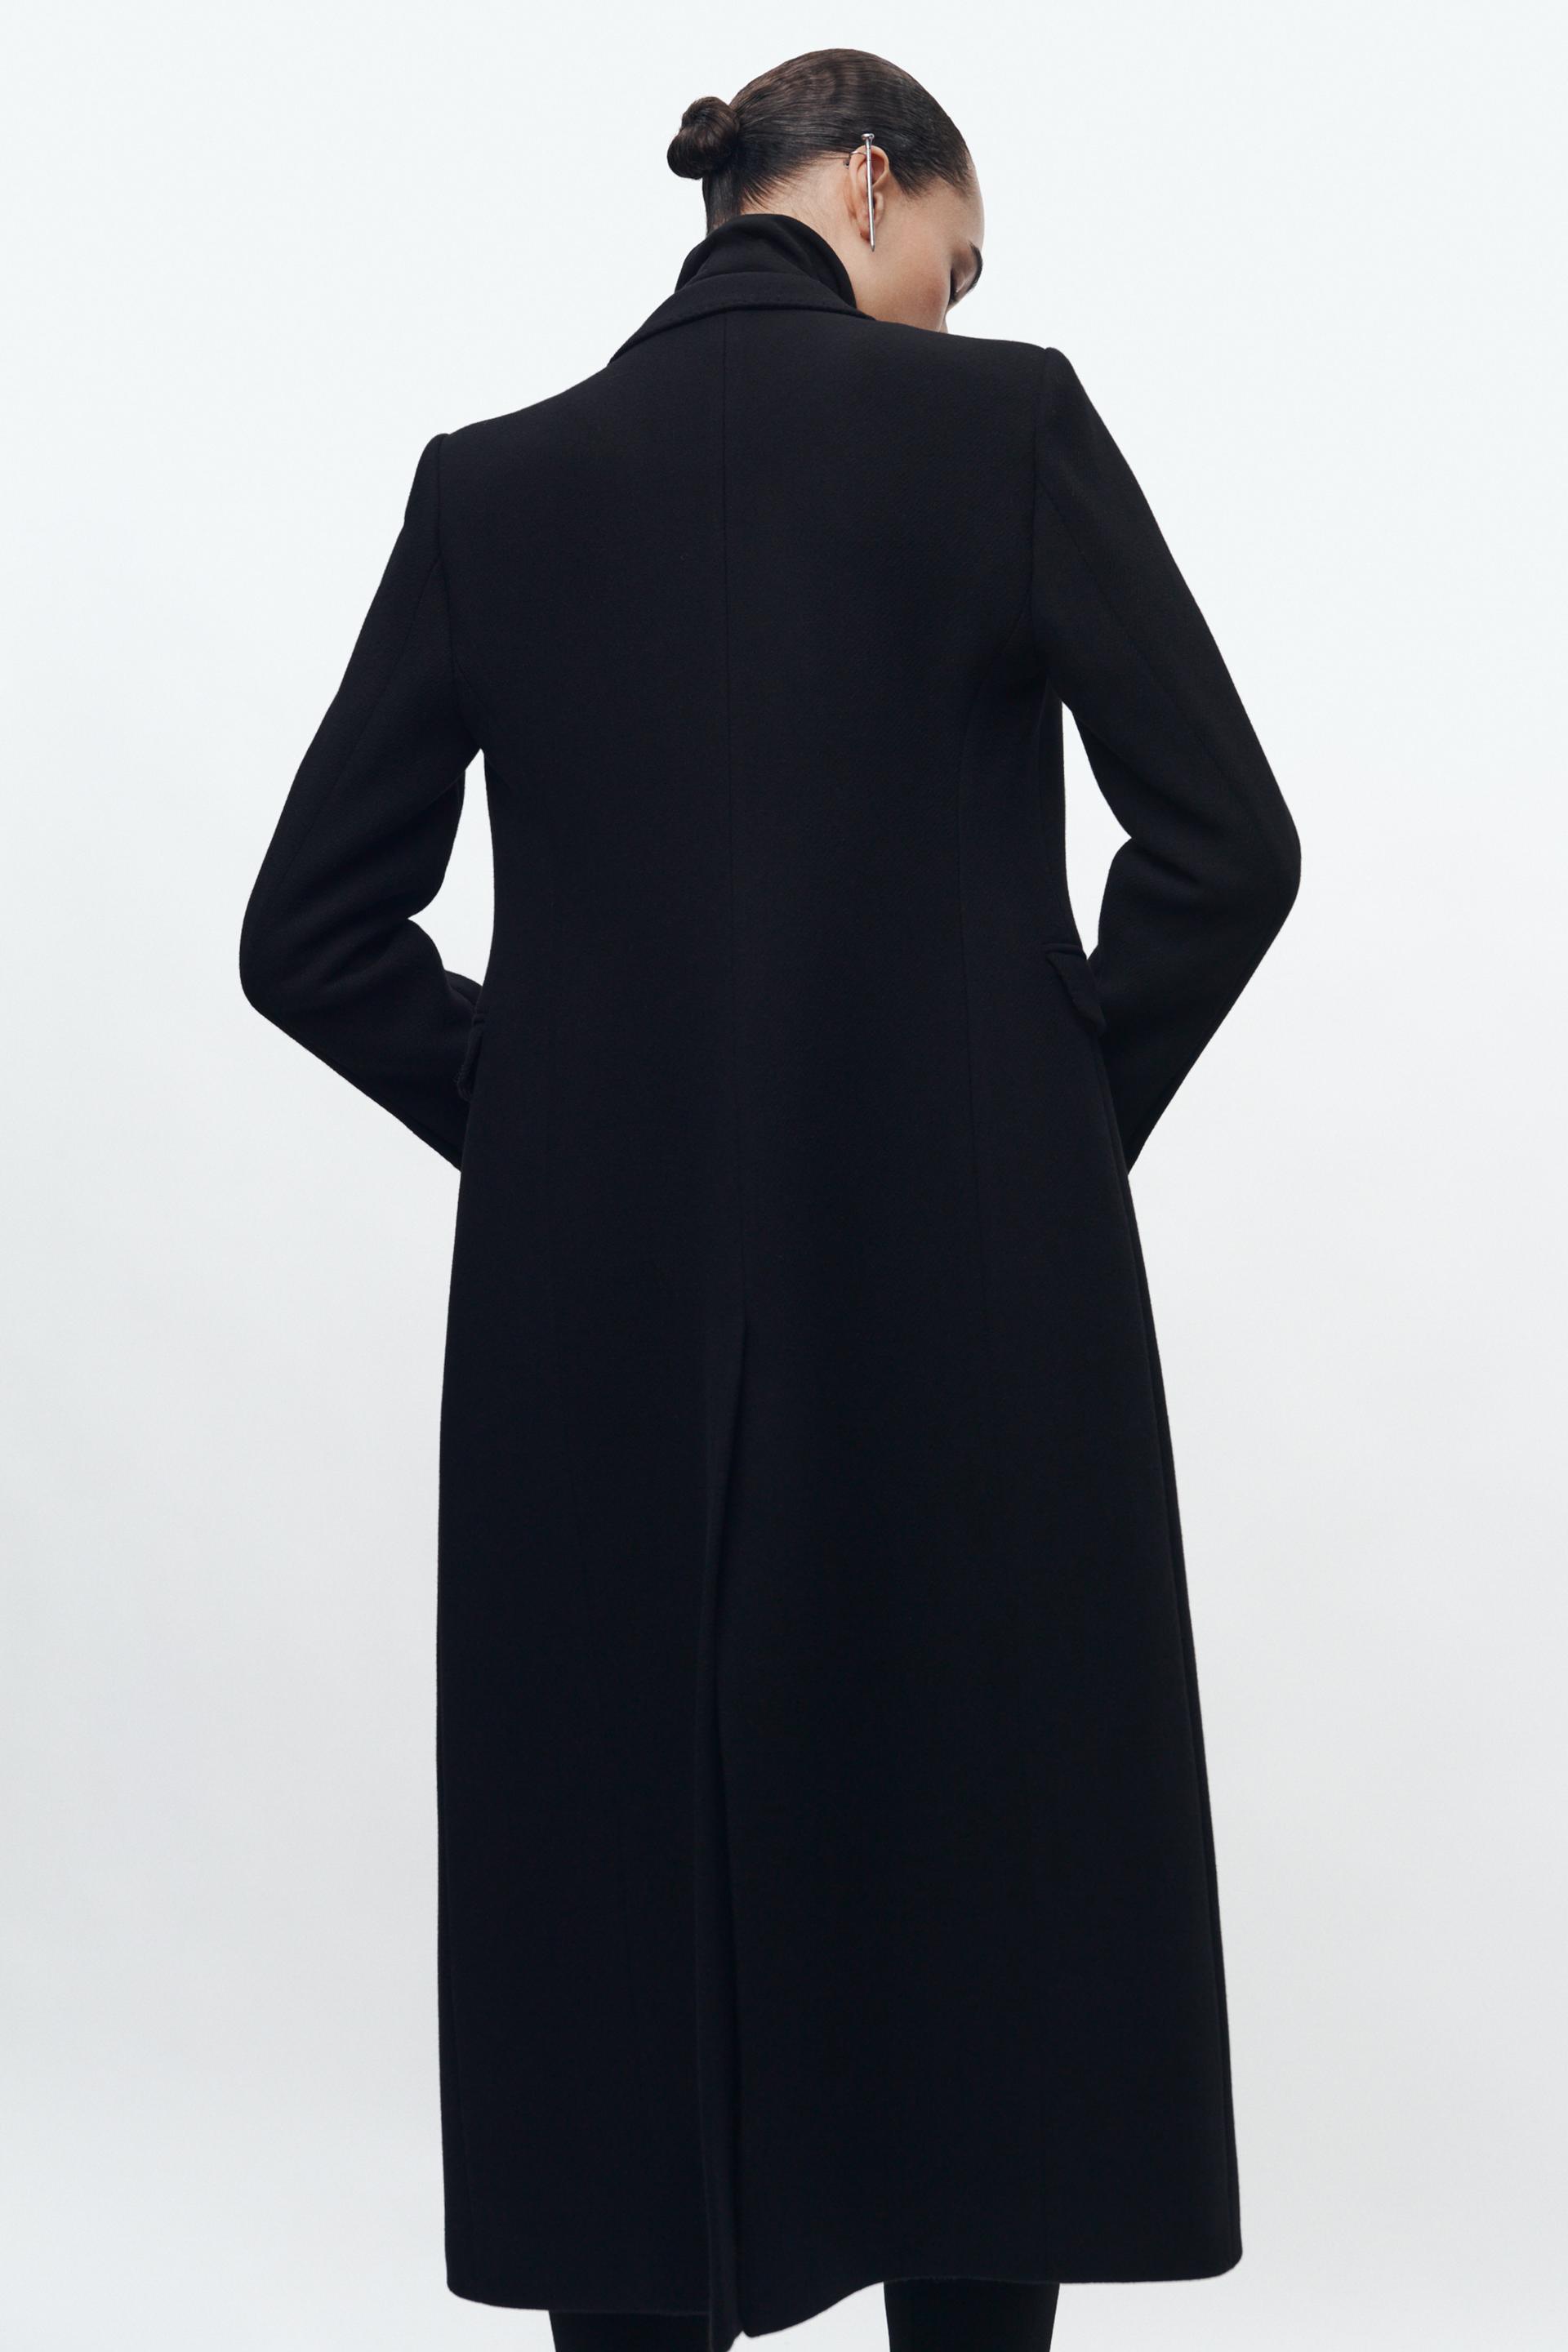 Zara Manteco Women Belted Wool Double Breasted Coat Black 2006/744